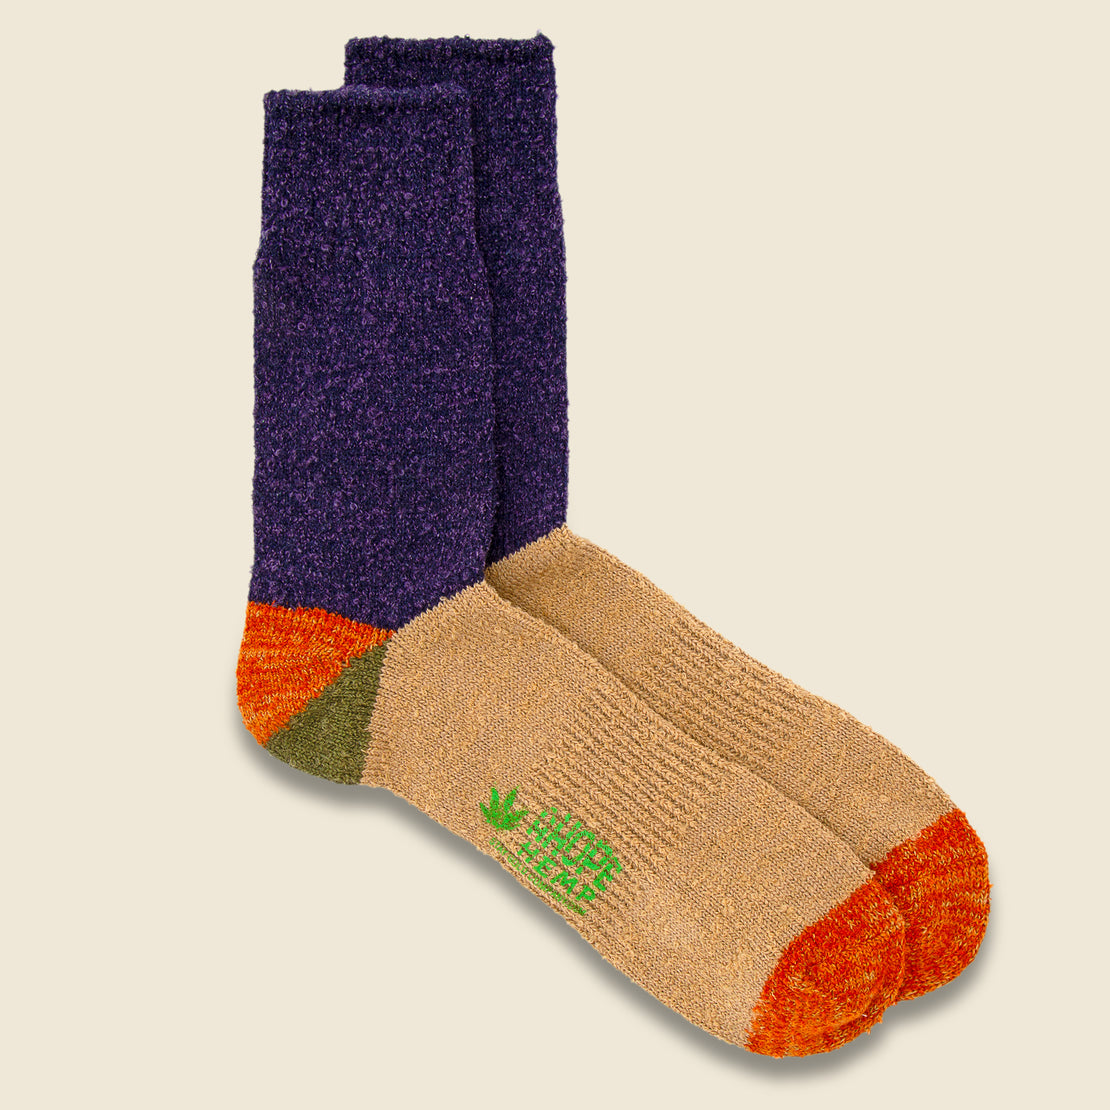 A Hope Hemp Tri-Color Fuzzy Sock - Tan